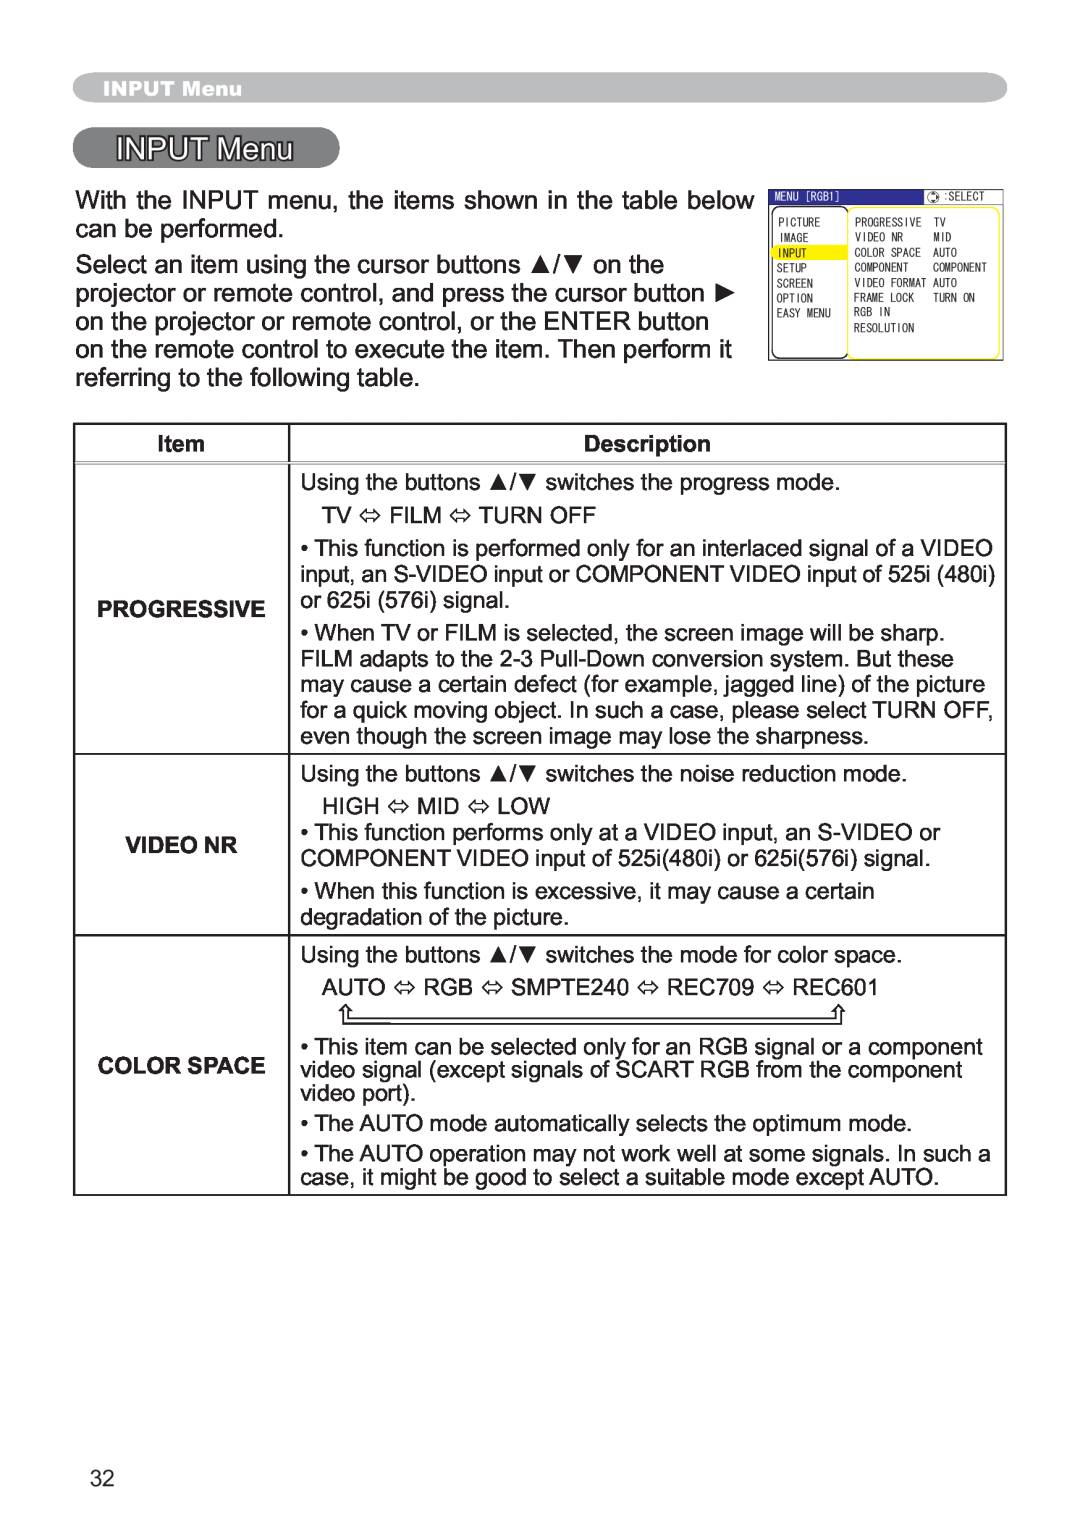 Hitachi ED-X12 user manual INPUT Menu, Item, Description, Progressive, Video Nr 